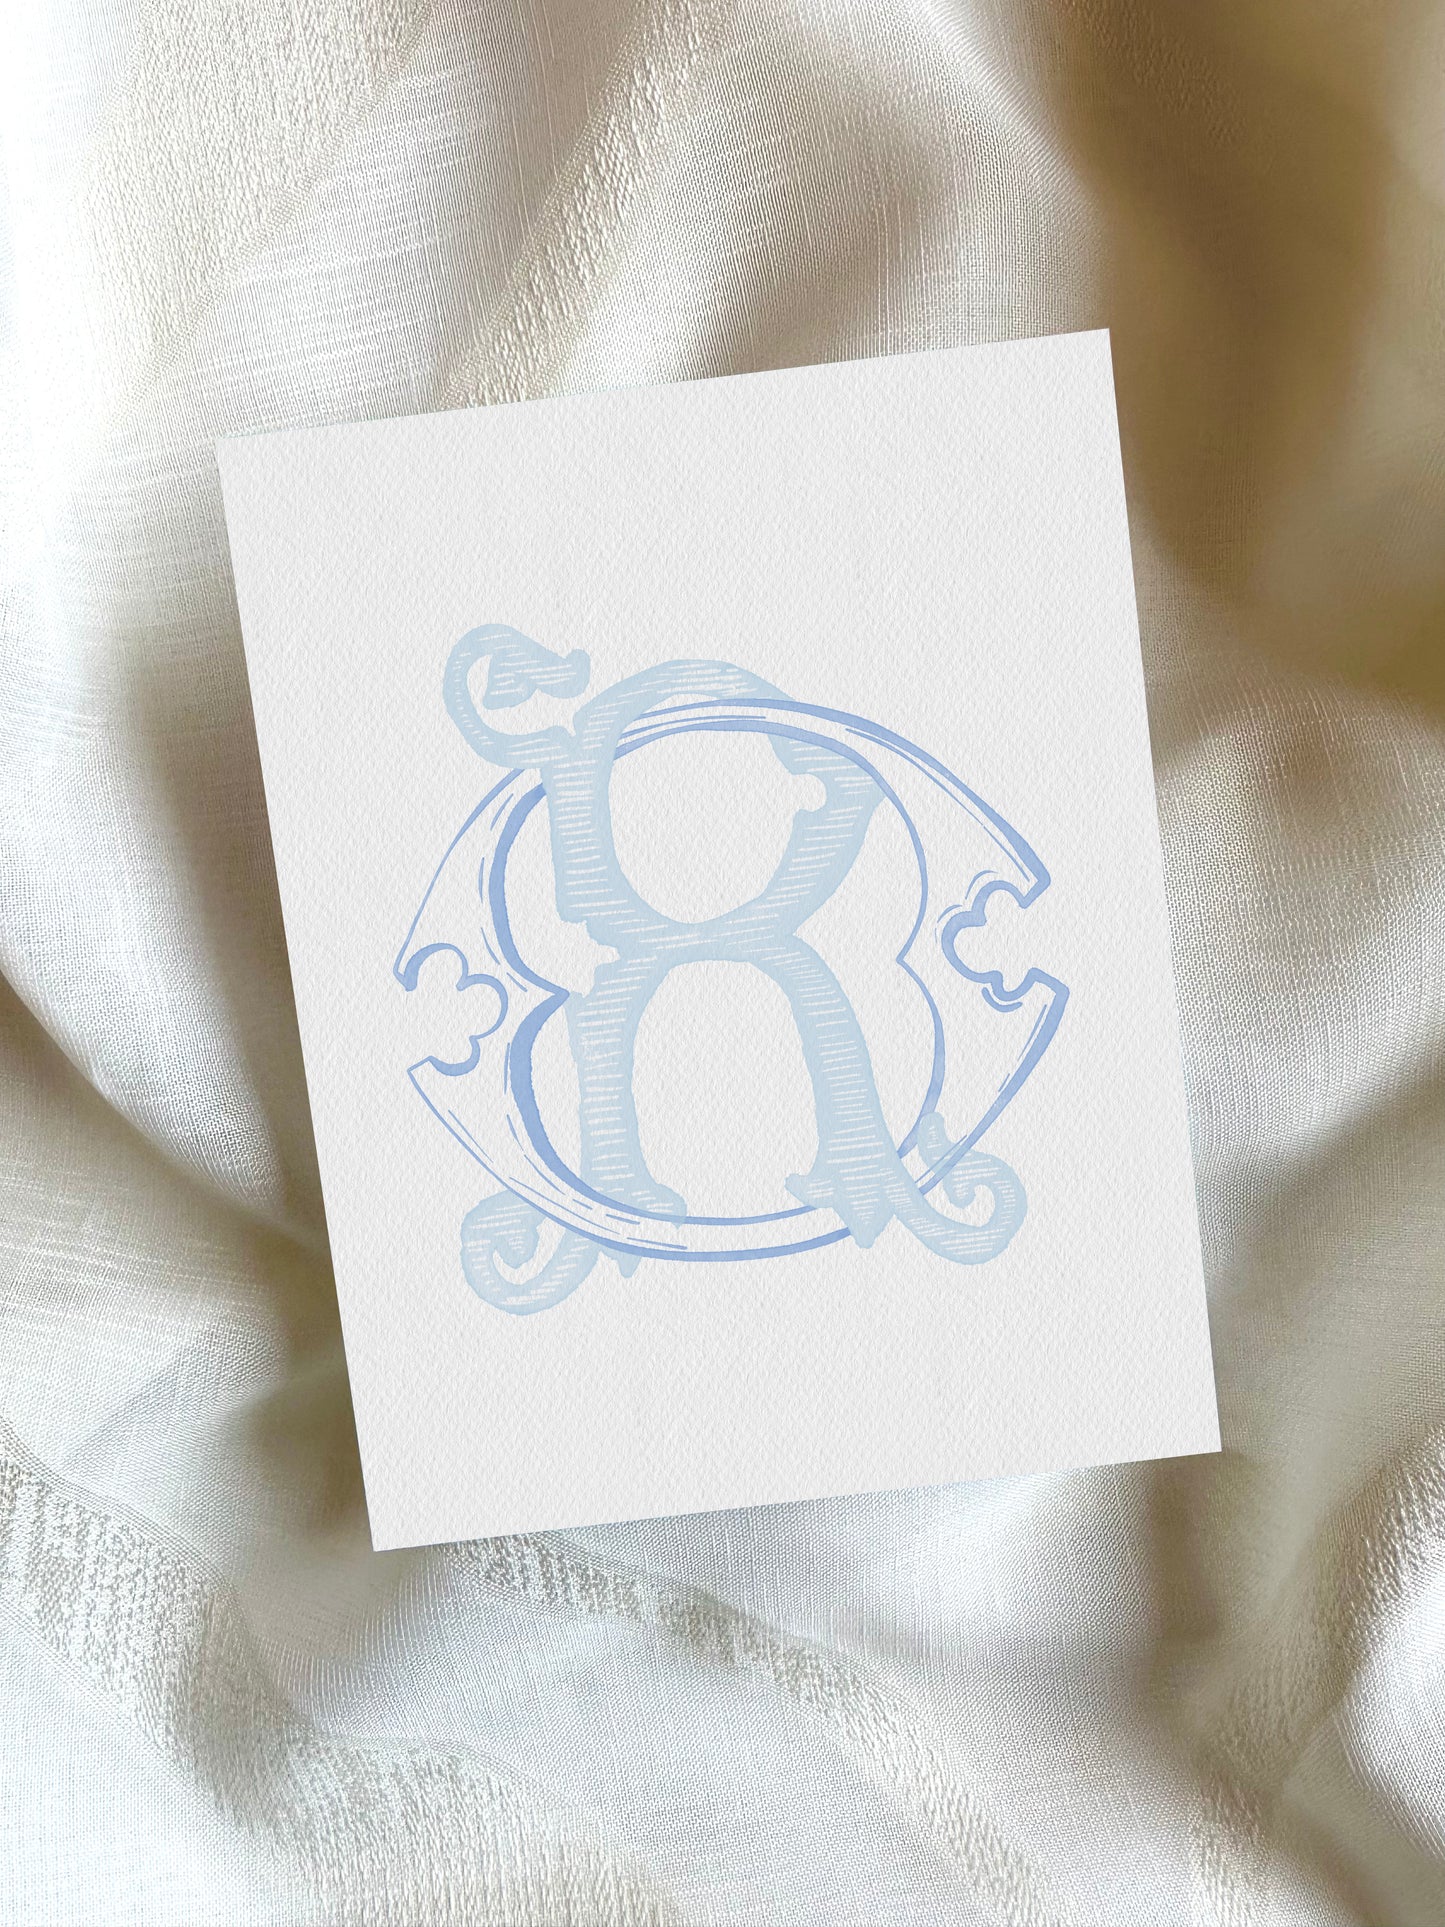 2 Letter Monogram with Letters OR RO | Digital Download - Wedding Monogram SVG, Personal Logo, Wedding Logo for Wedding Invitations The Wedding Crest Lab